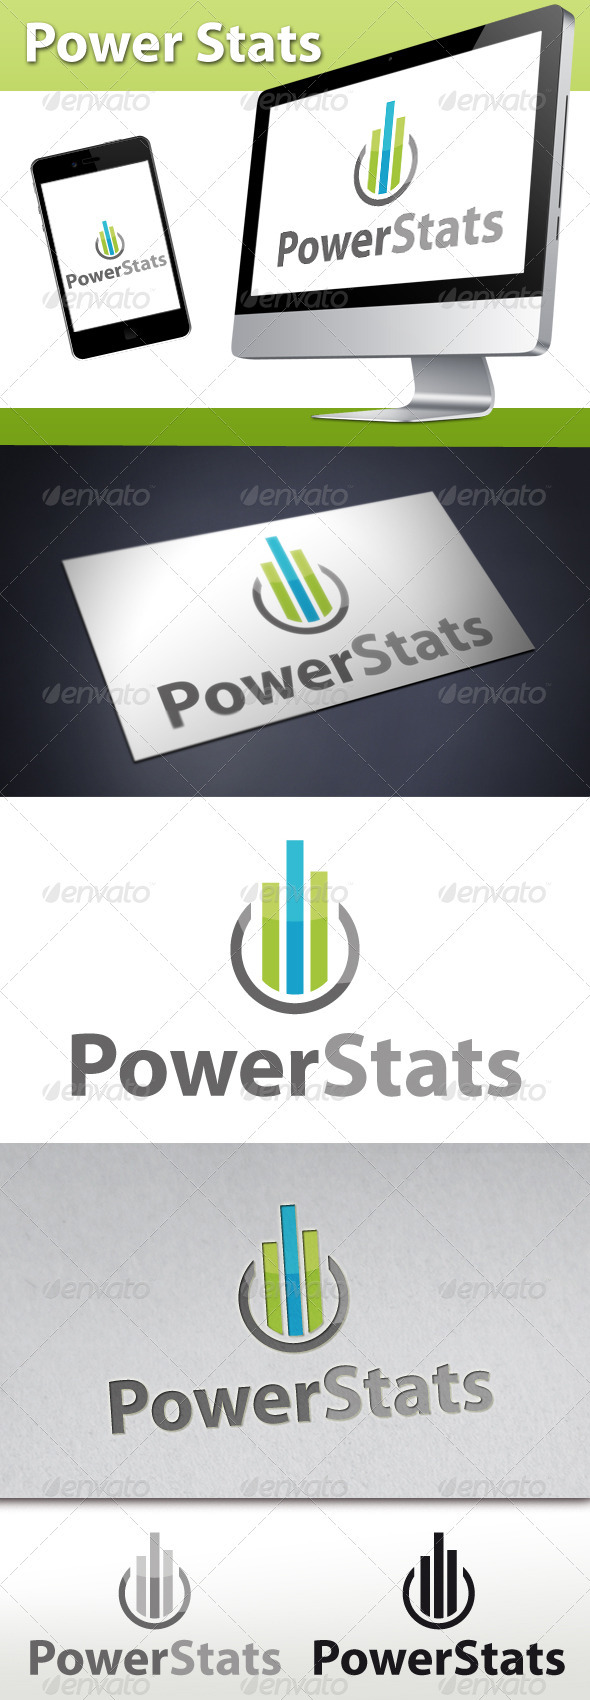 Power Stats Marketing Logo